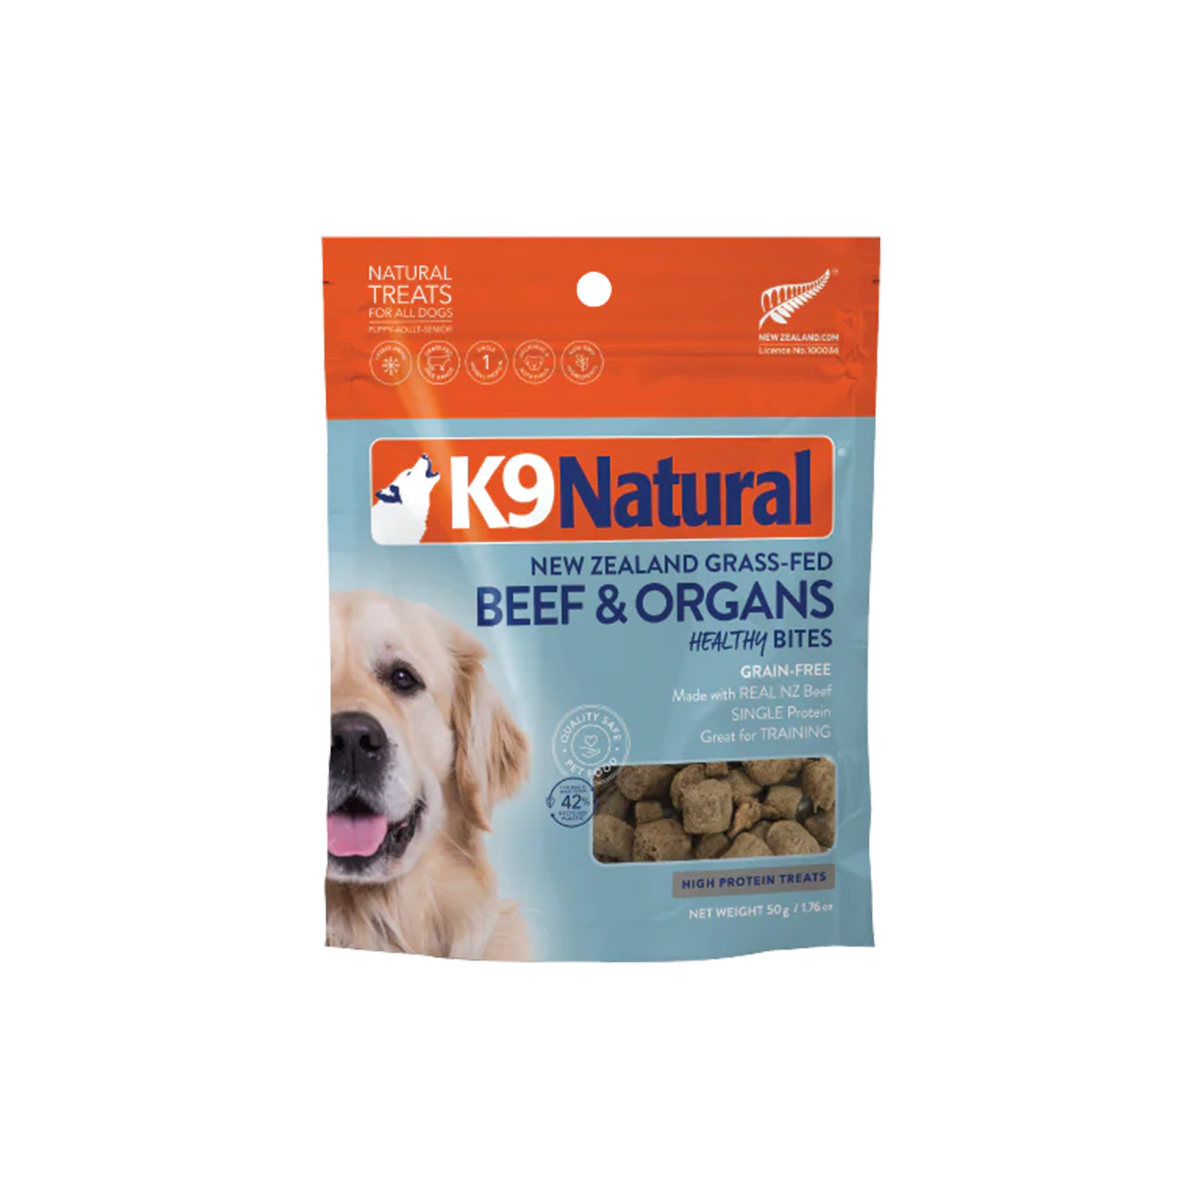 K9 Natural Freeze-Dried Healthy Bites Dog Treats - Beef